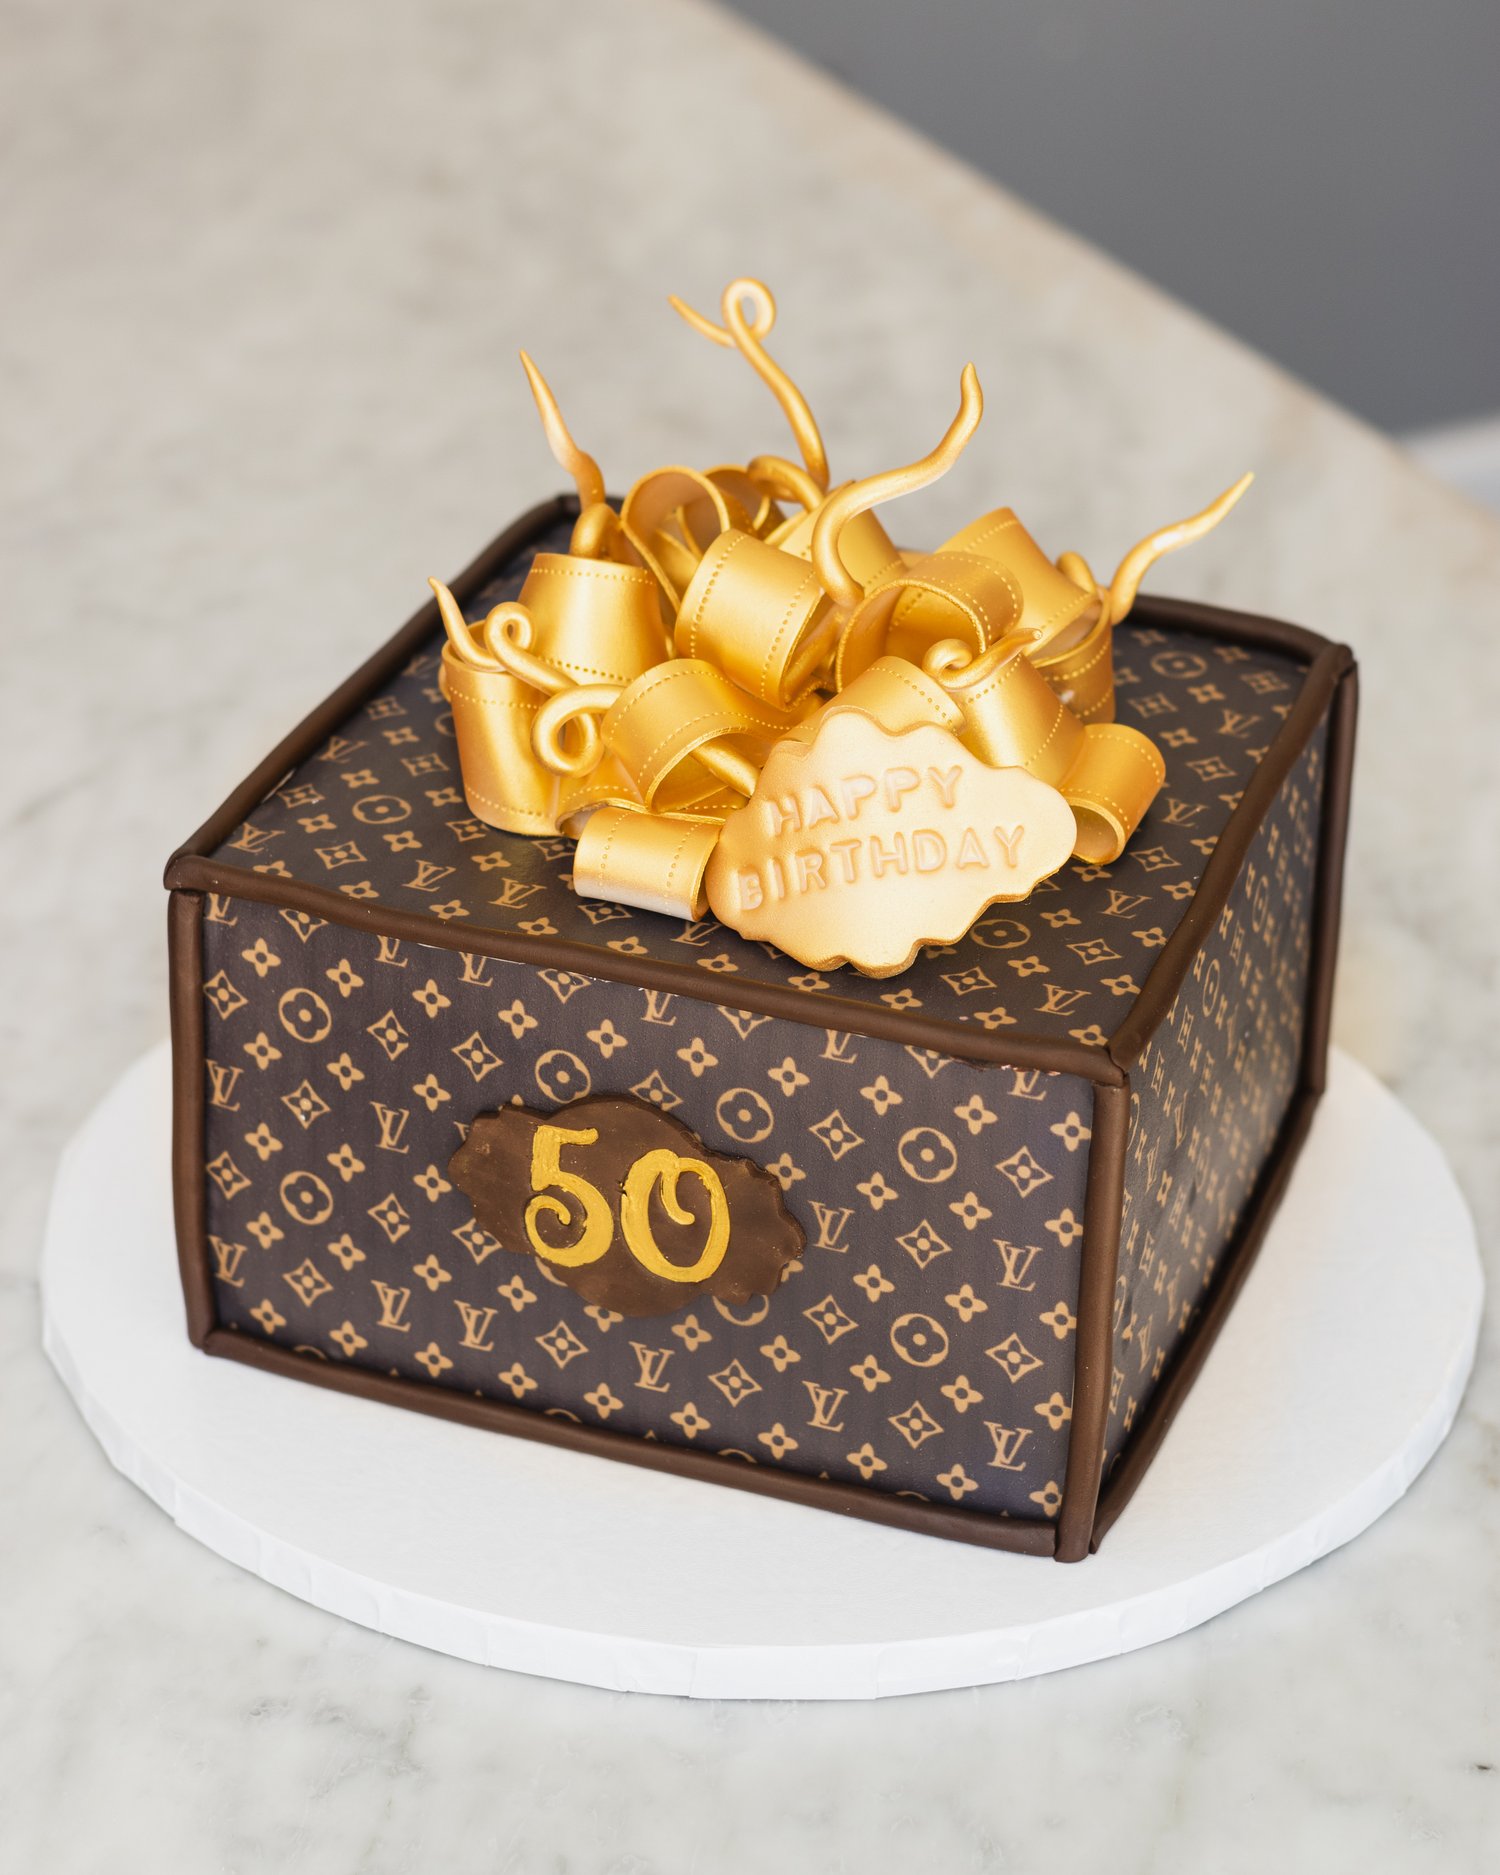 Louis Vuitton Gift Box Cake Recipes